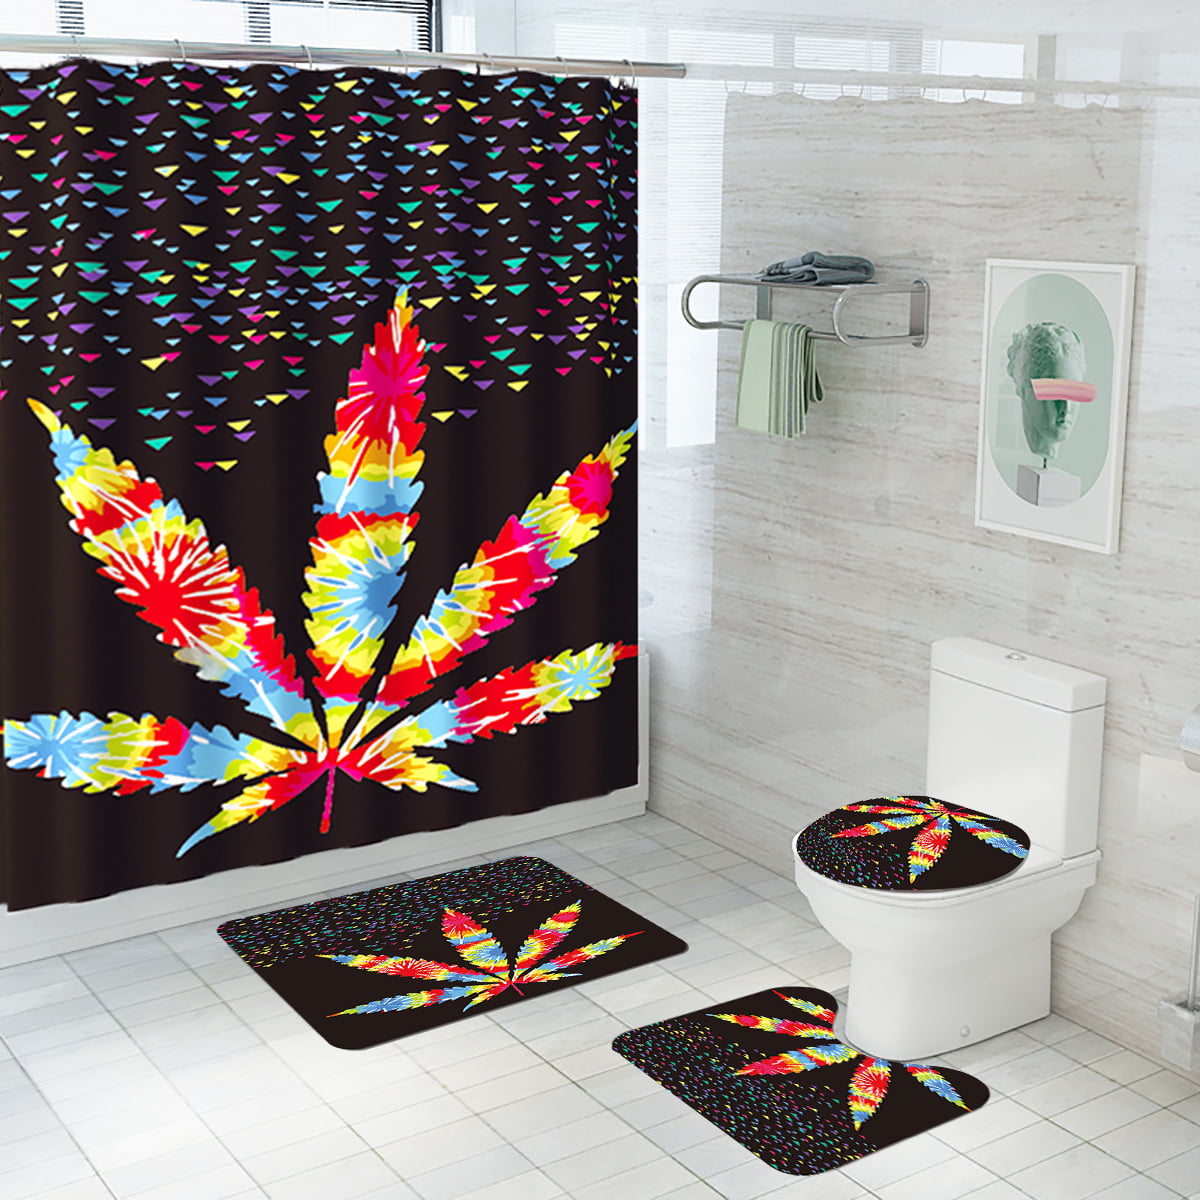 Details about   Starry Blue Alphabet 3D Shower Curtain Waterproof Fabric Bathroom Decoration 